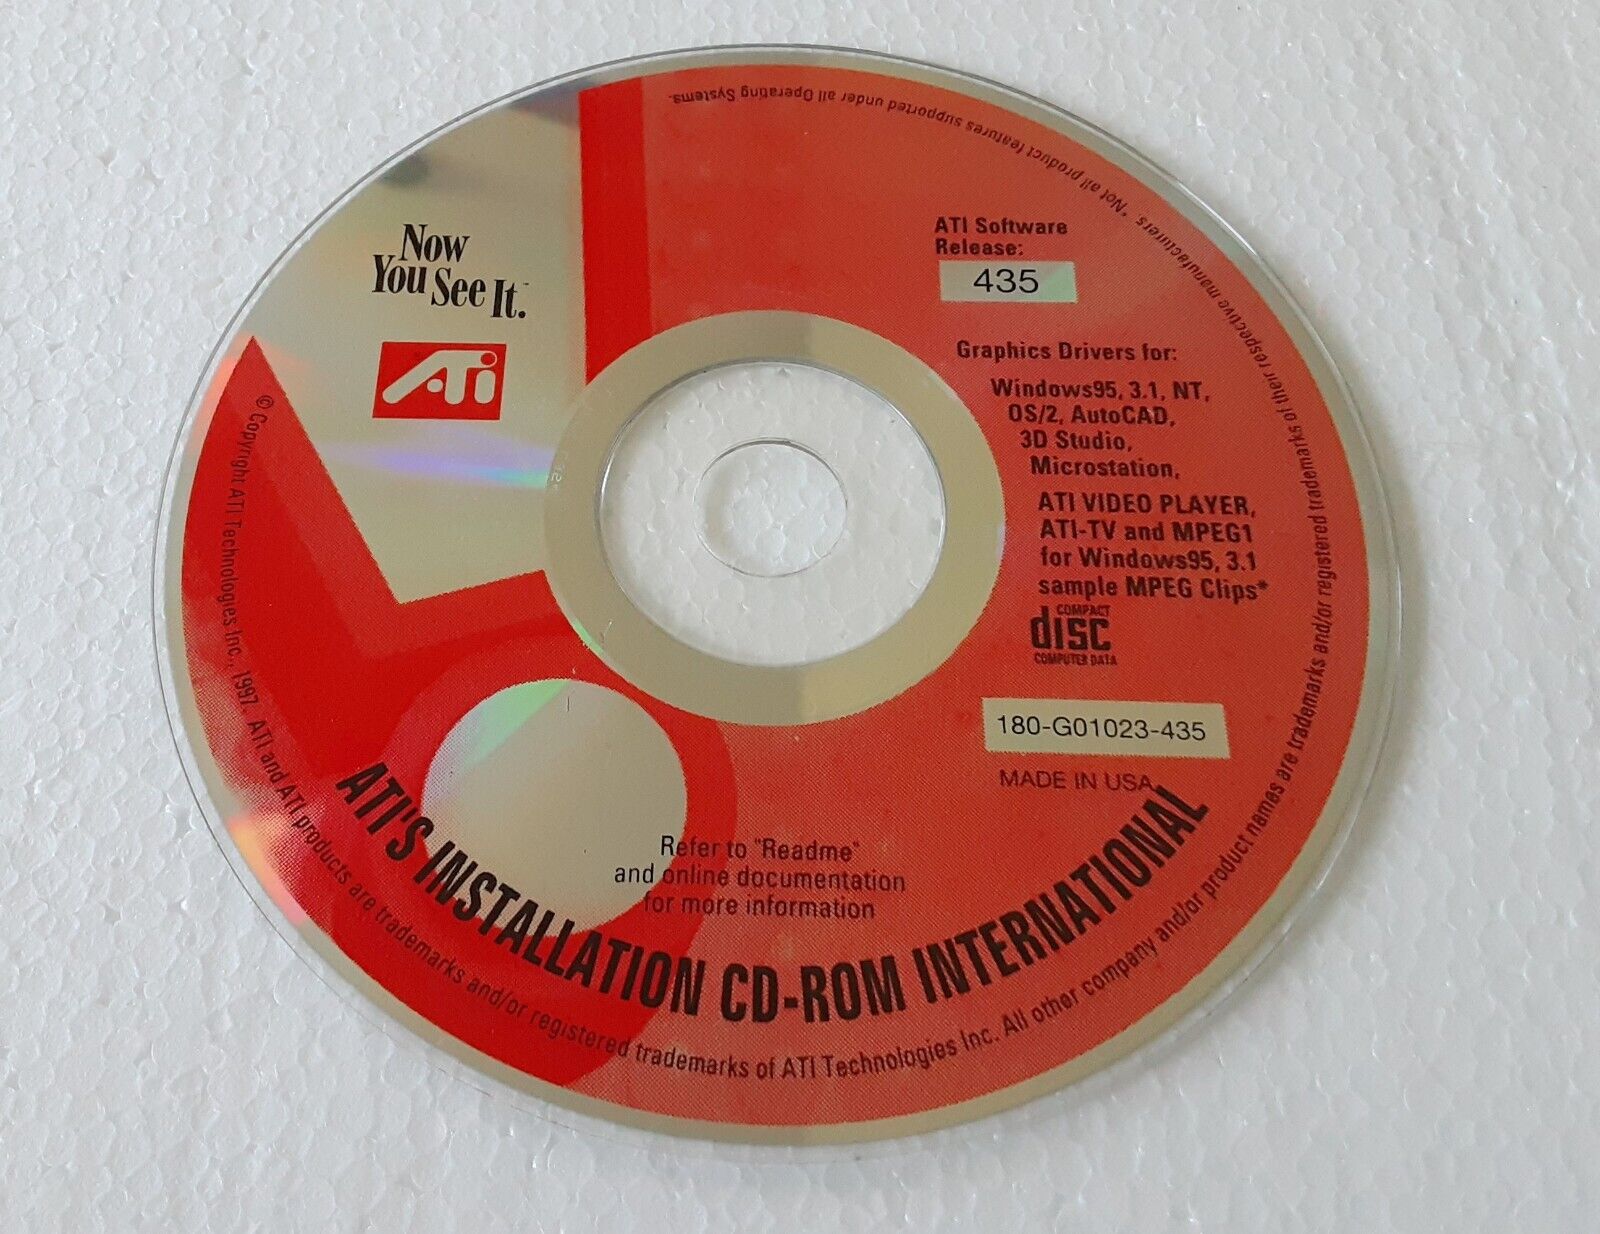 Vintage ATI's Installation CD-ROM 435 Release International 1997